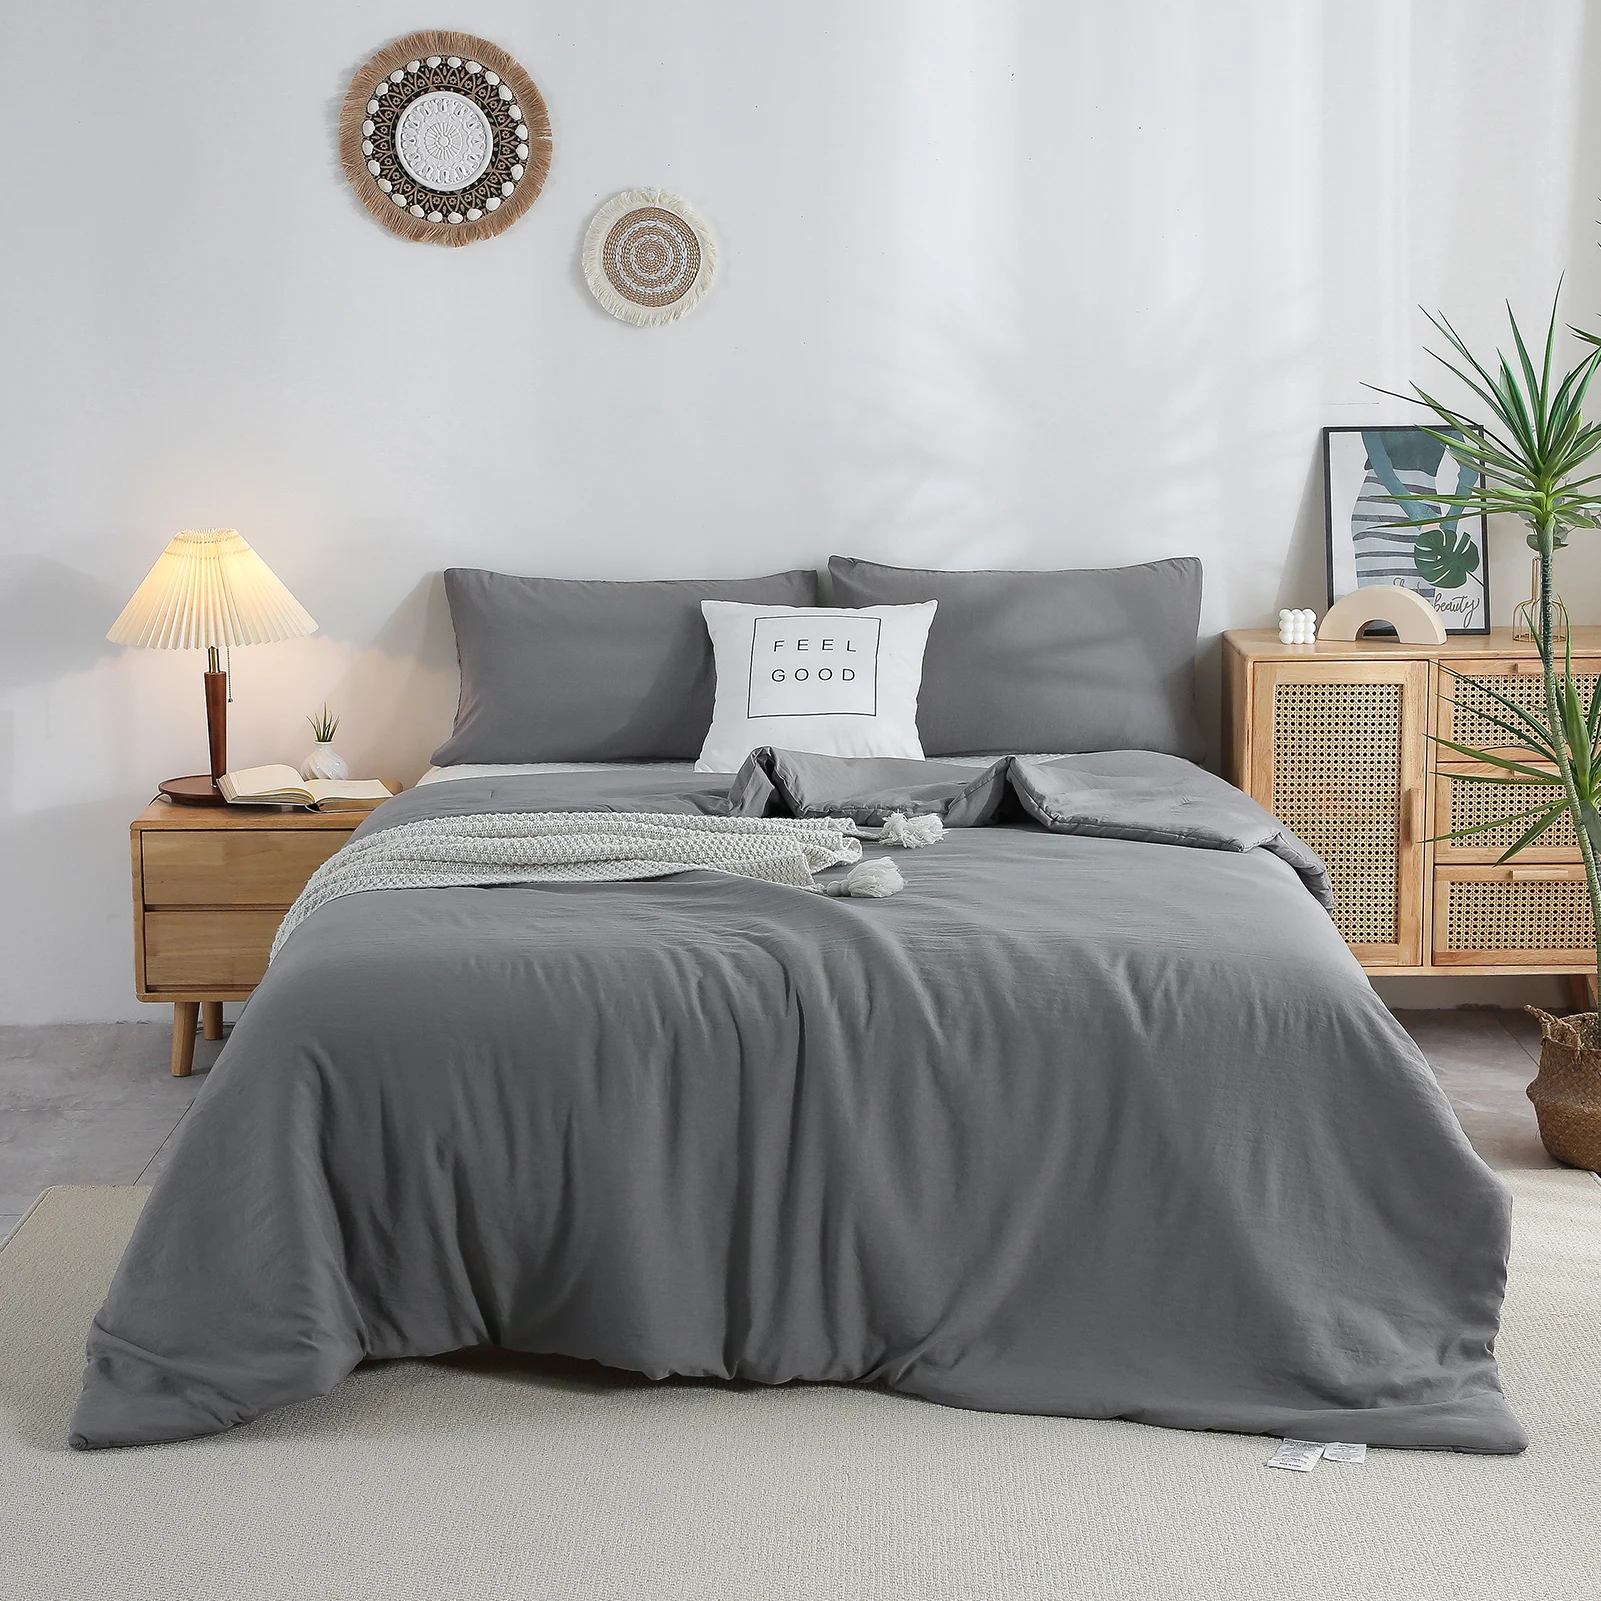 

Lightweight Fluffy Bedding Twin Set Comforter Down Duvet Cover Dark Gray Comfortable Bed Set with Pillow Sham